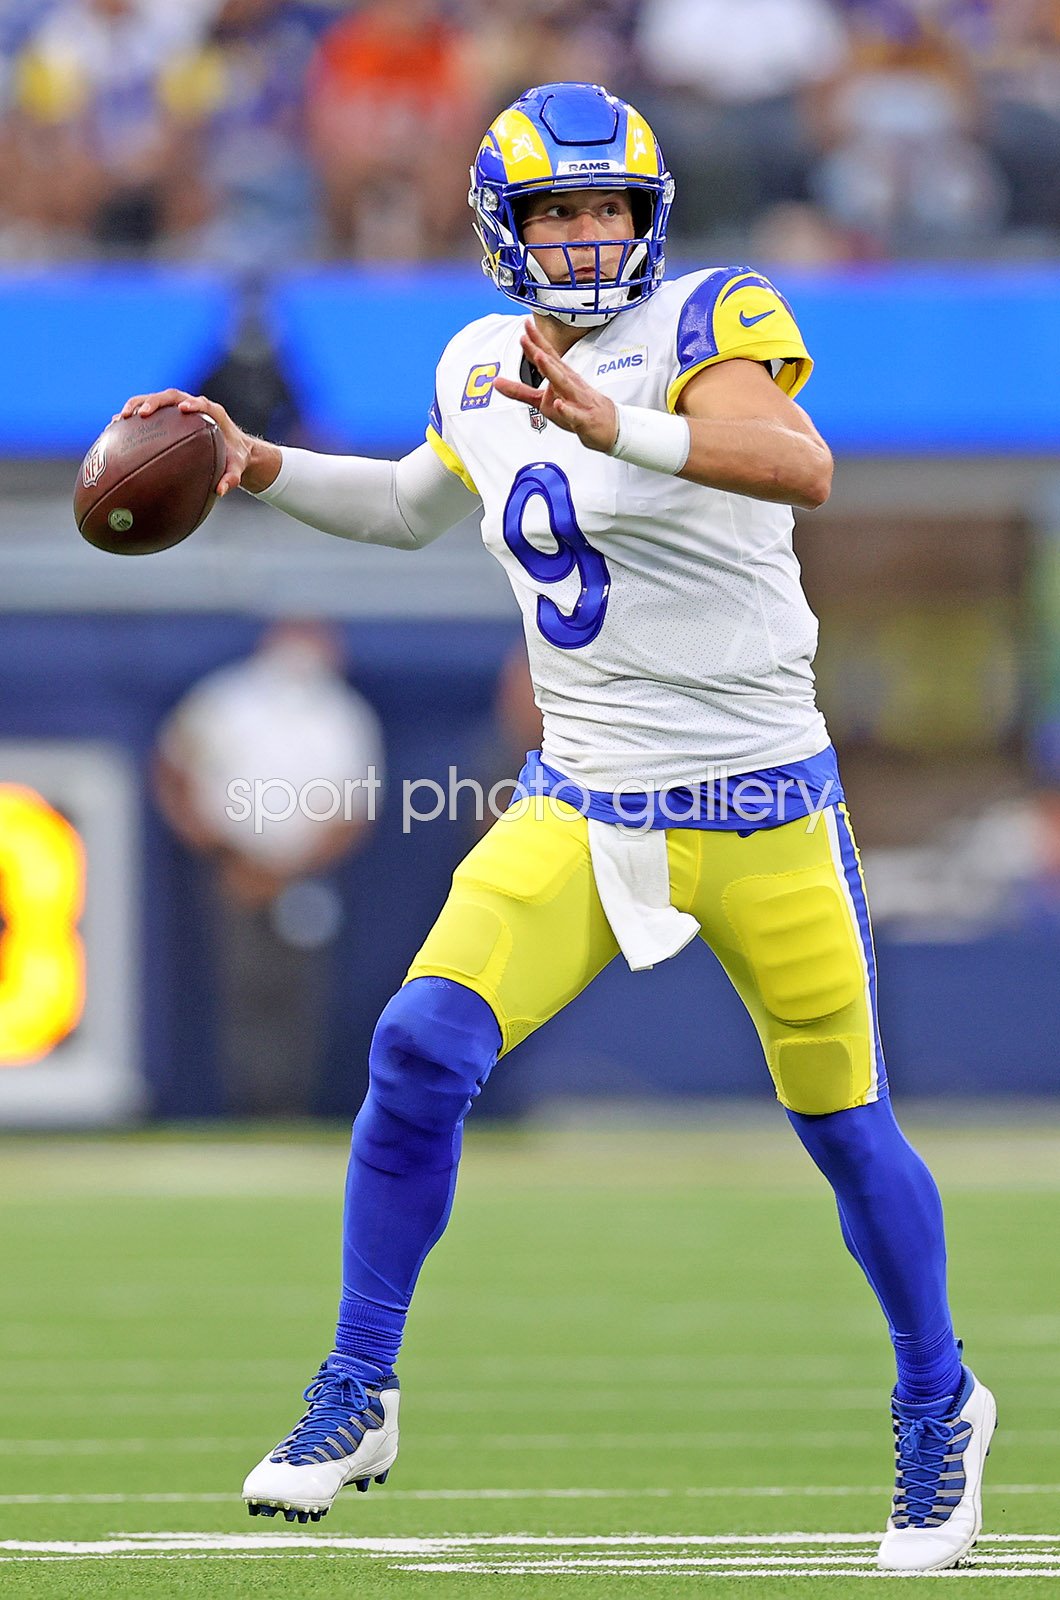 Matthew Stafford Los Angeles Rams Quarterback v Chicago Bears 2021 Images